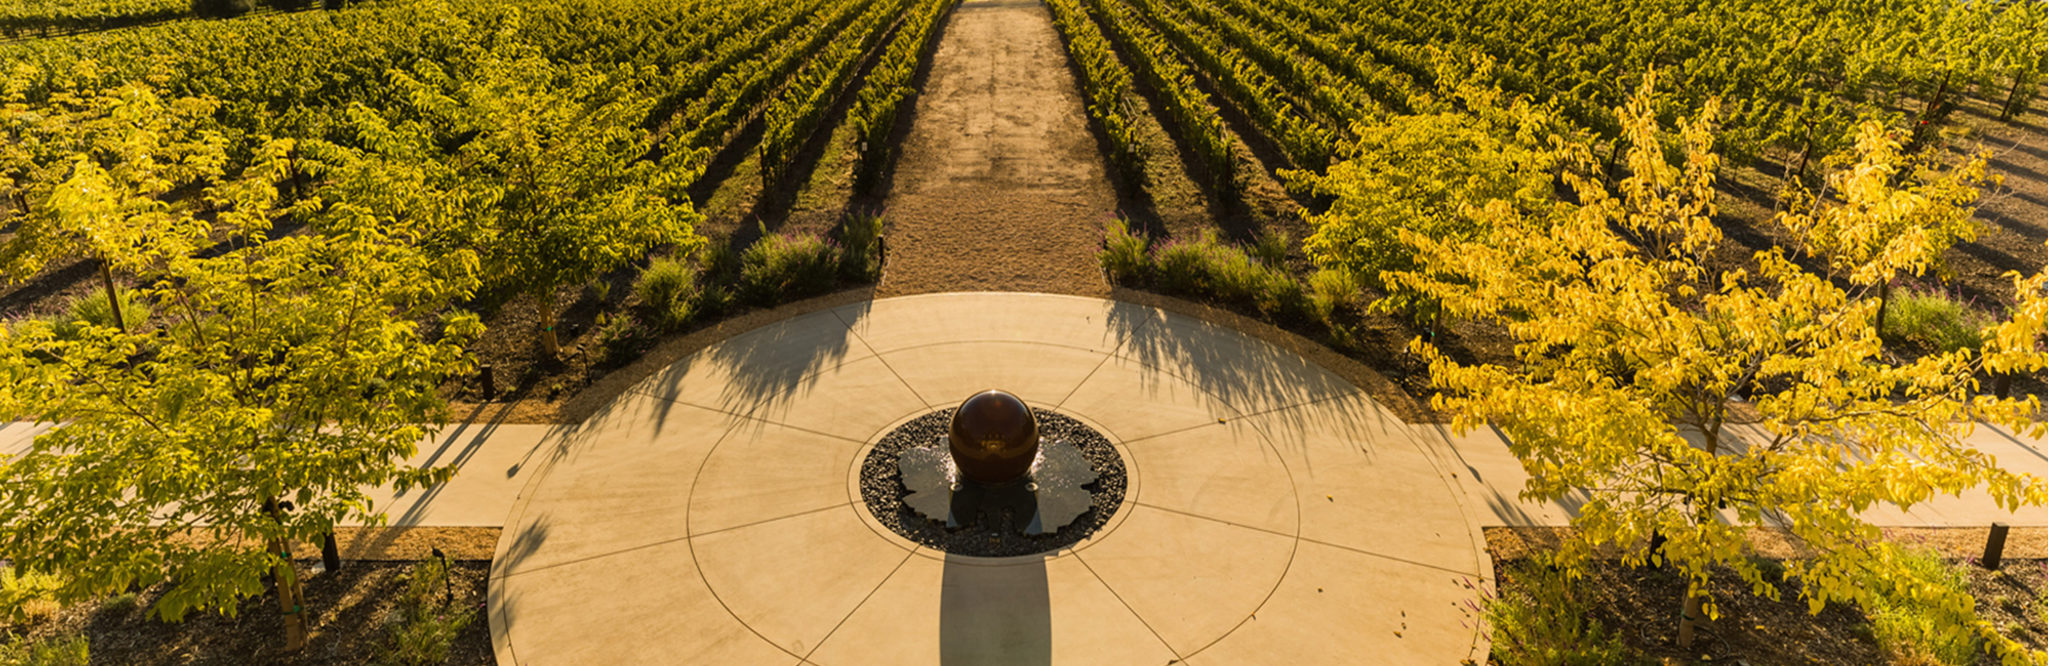 Napa Valley Vineyards Calistoga Winery Davis Estates